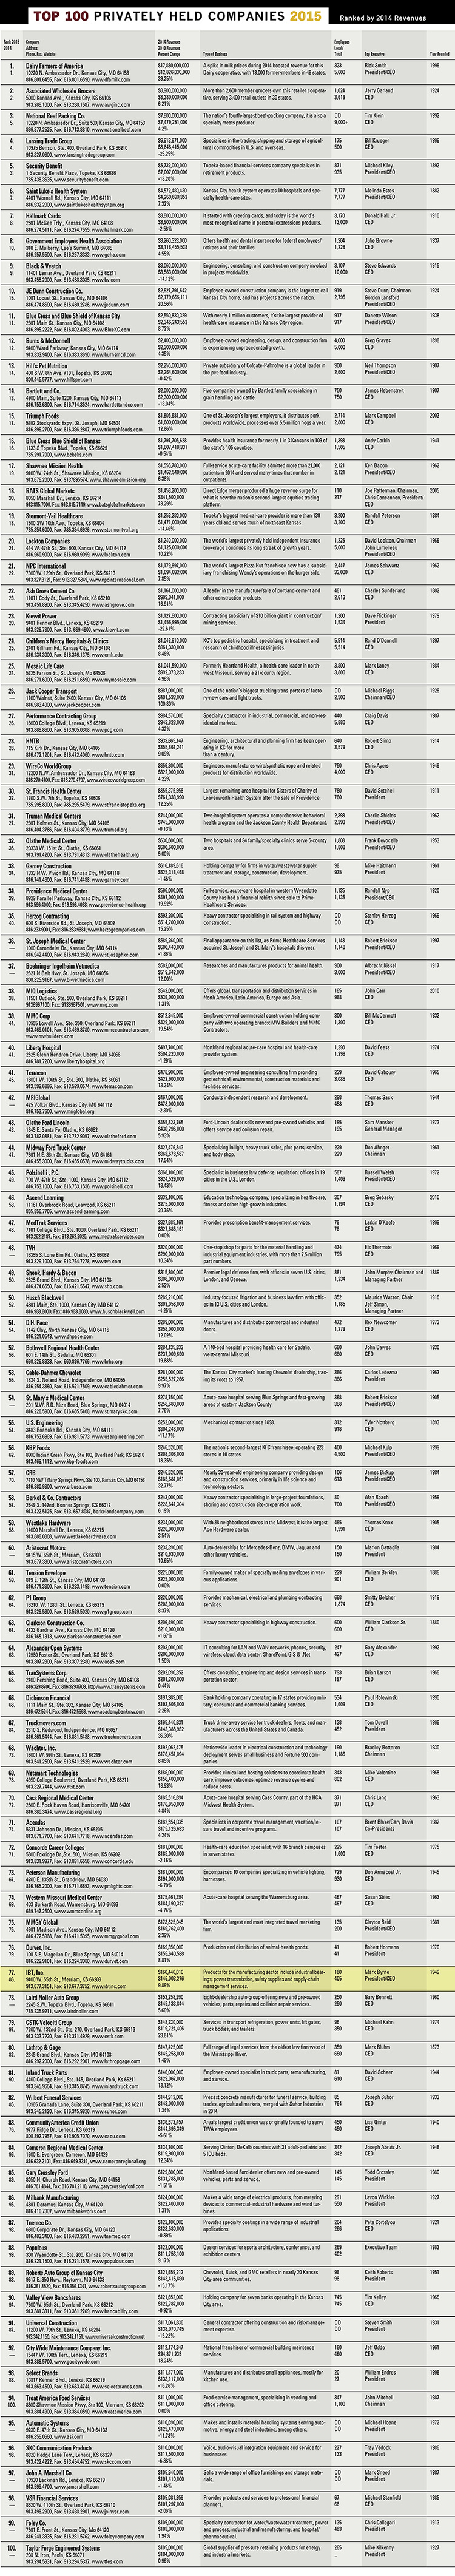 Ingrams top 100 private companies